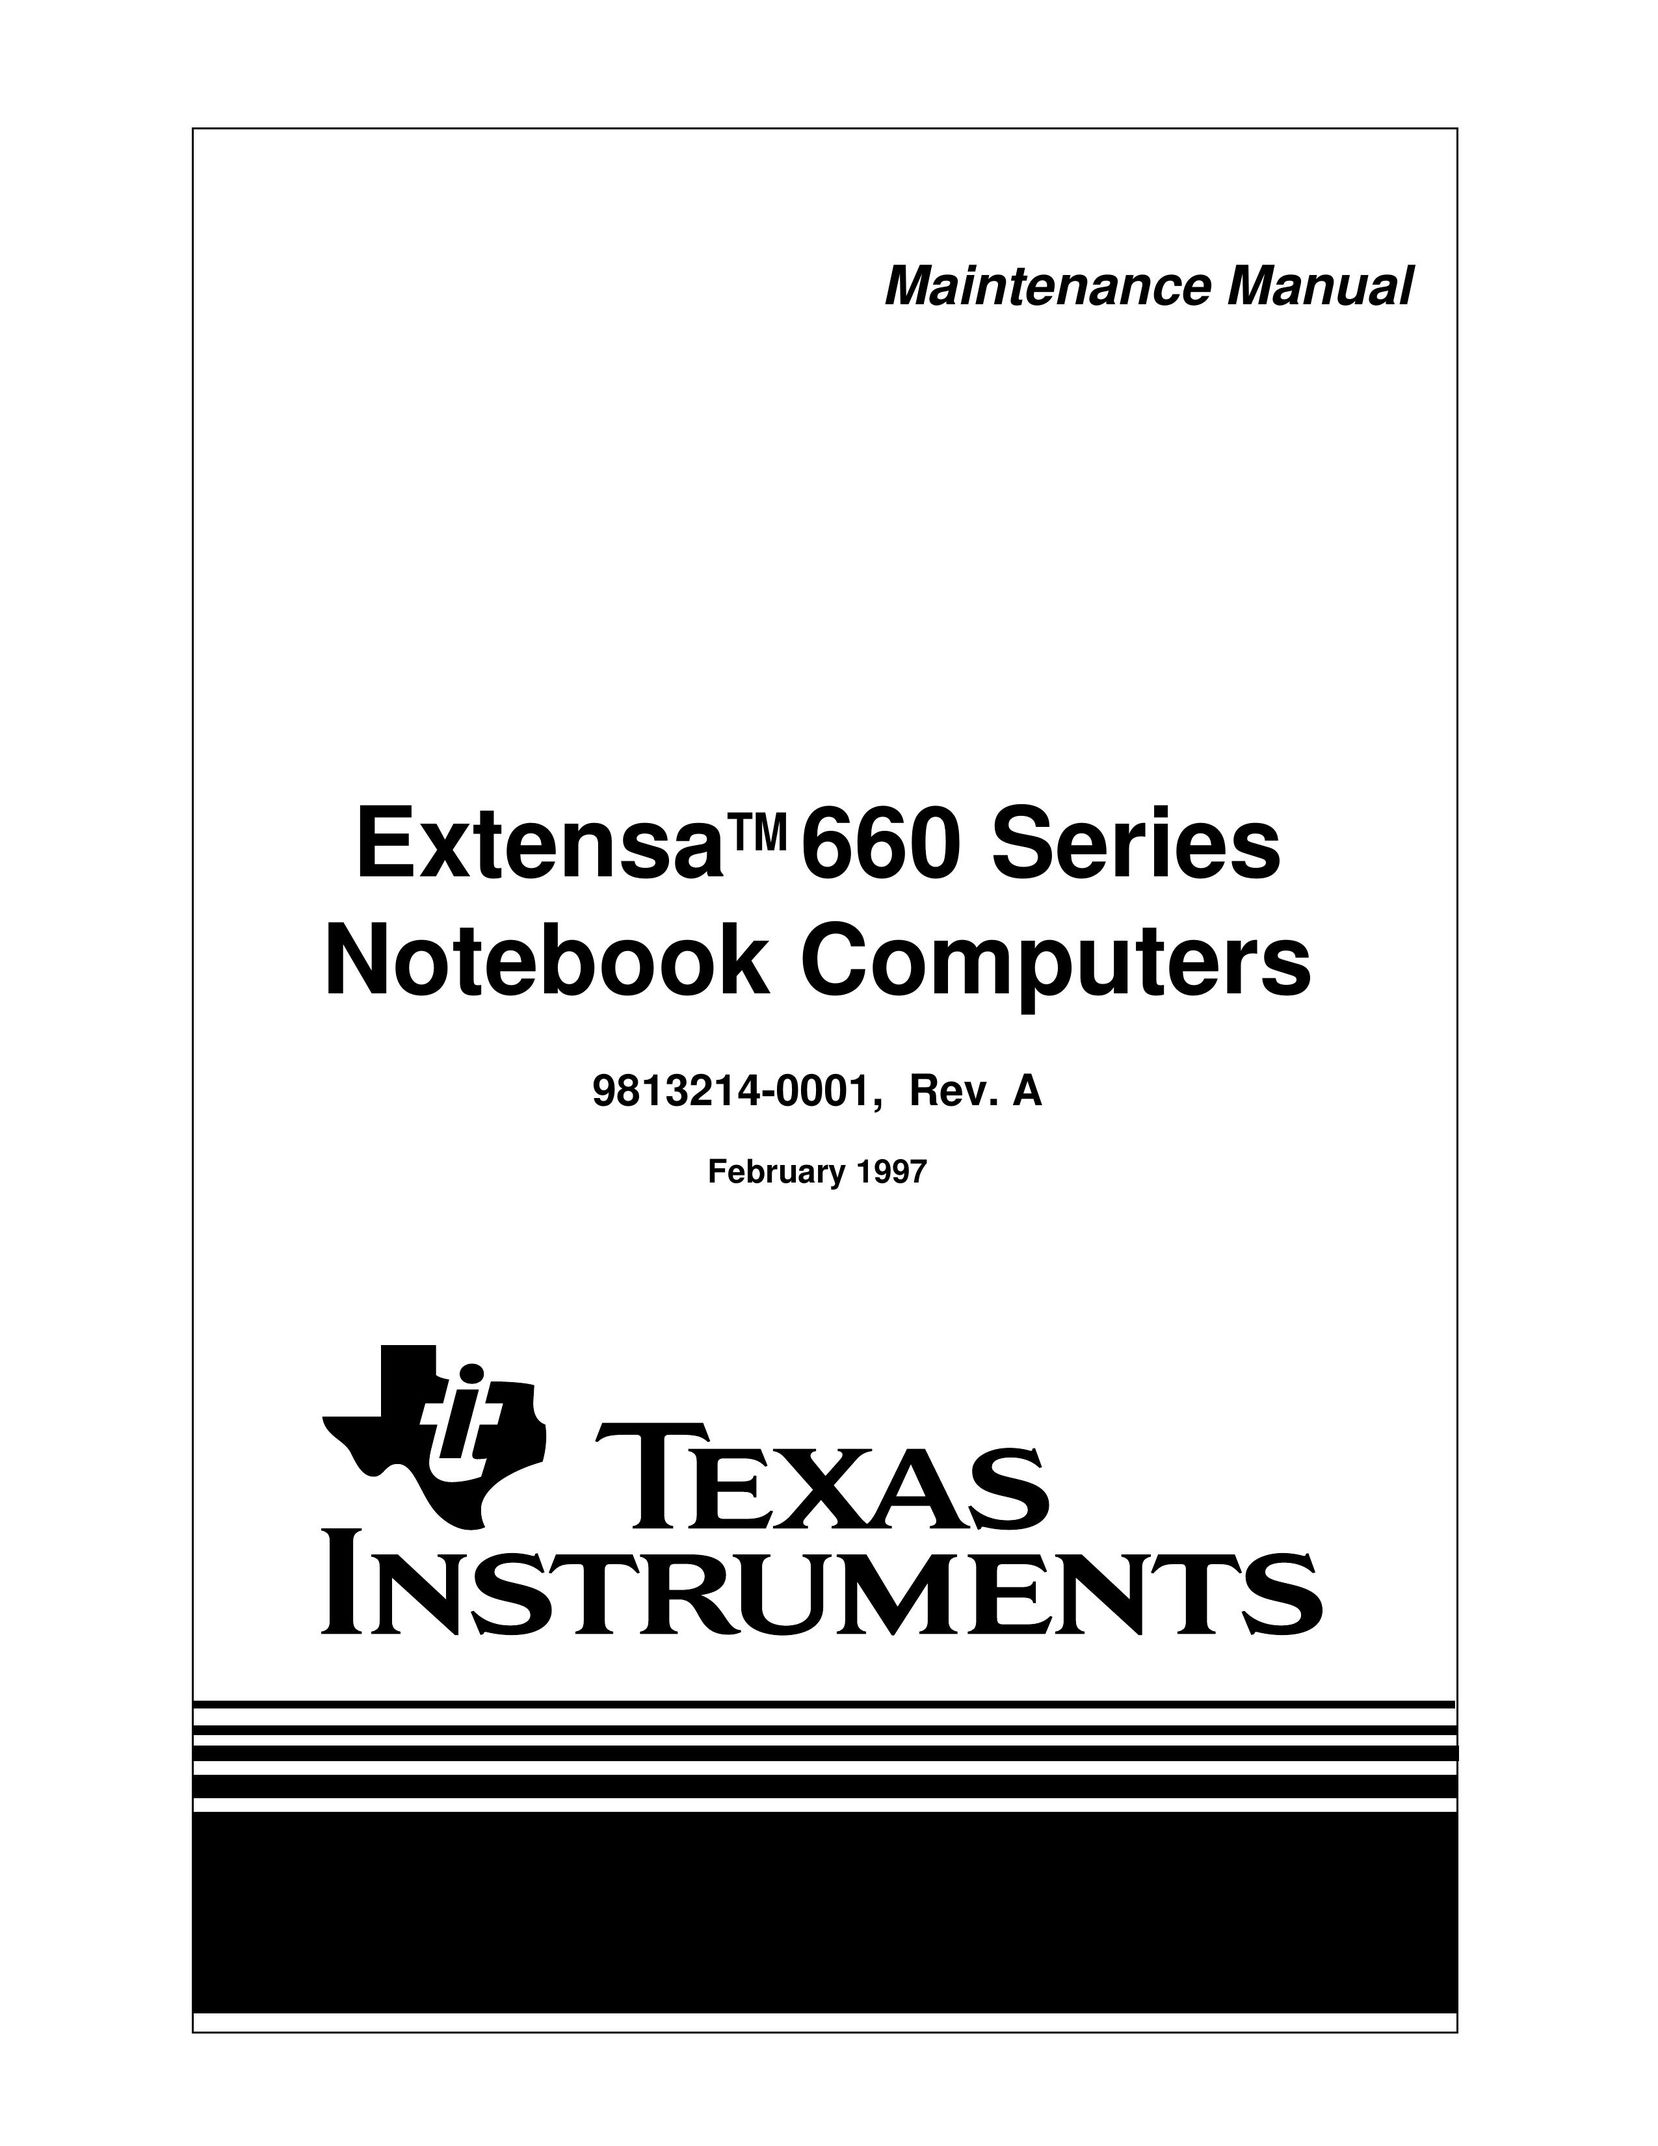 Texas Instruments 660 Laptop User Manual